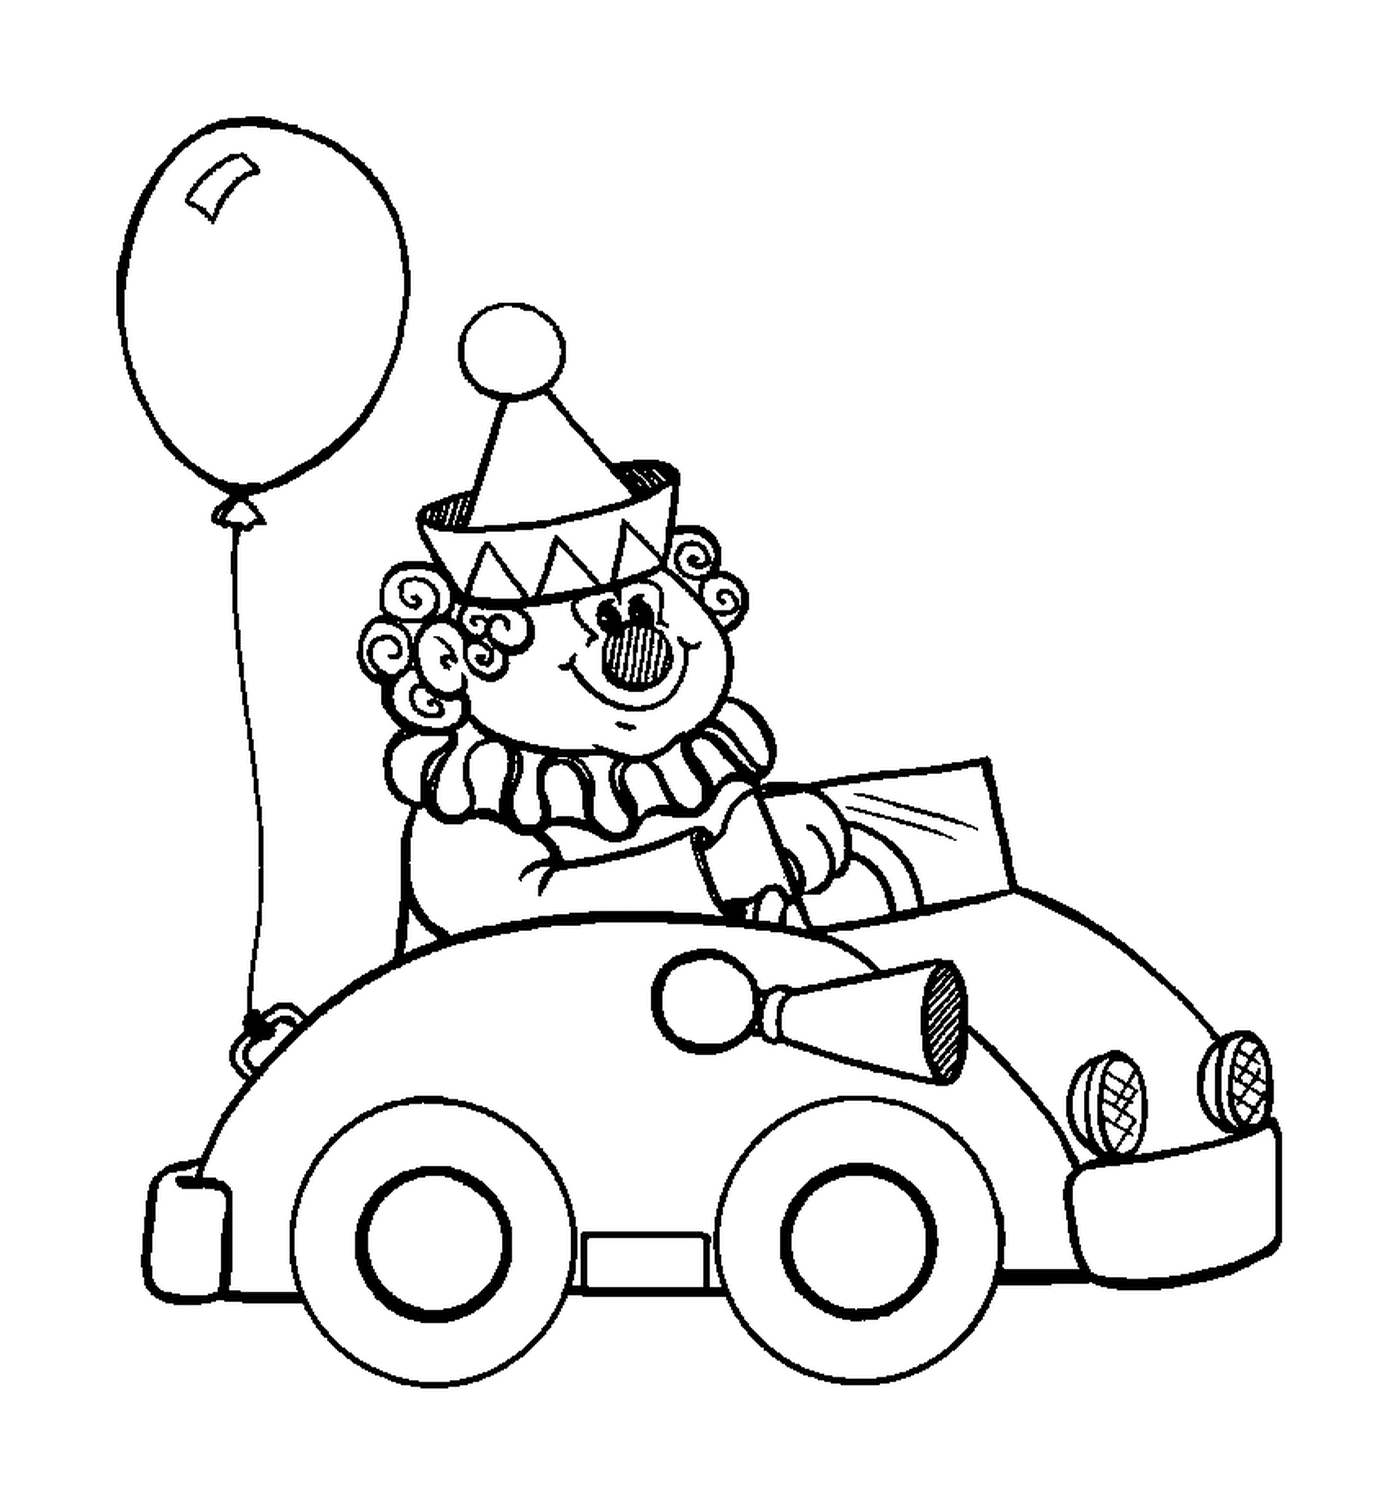  A clown in a car for the circus 